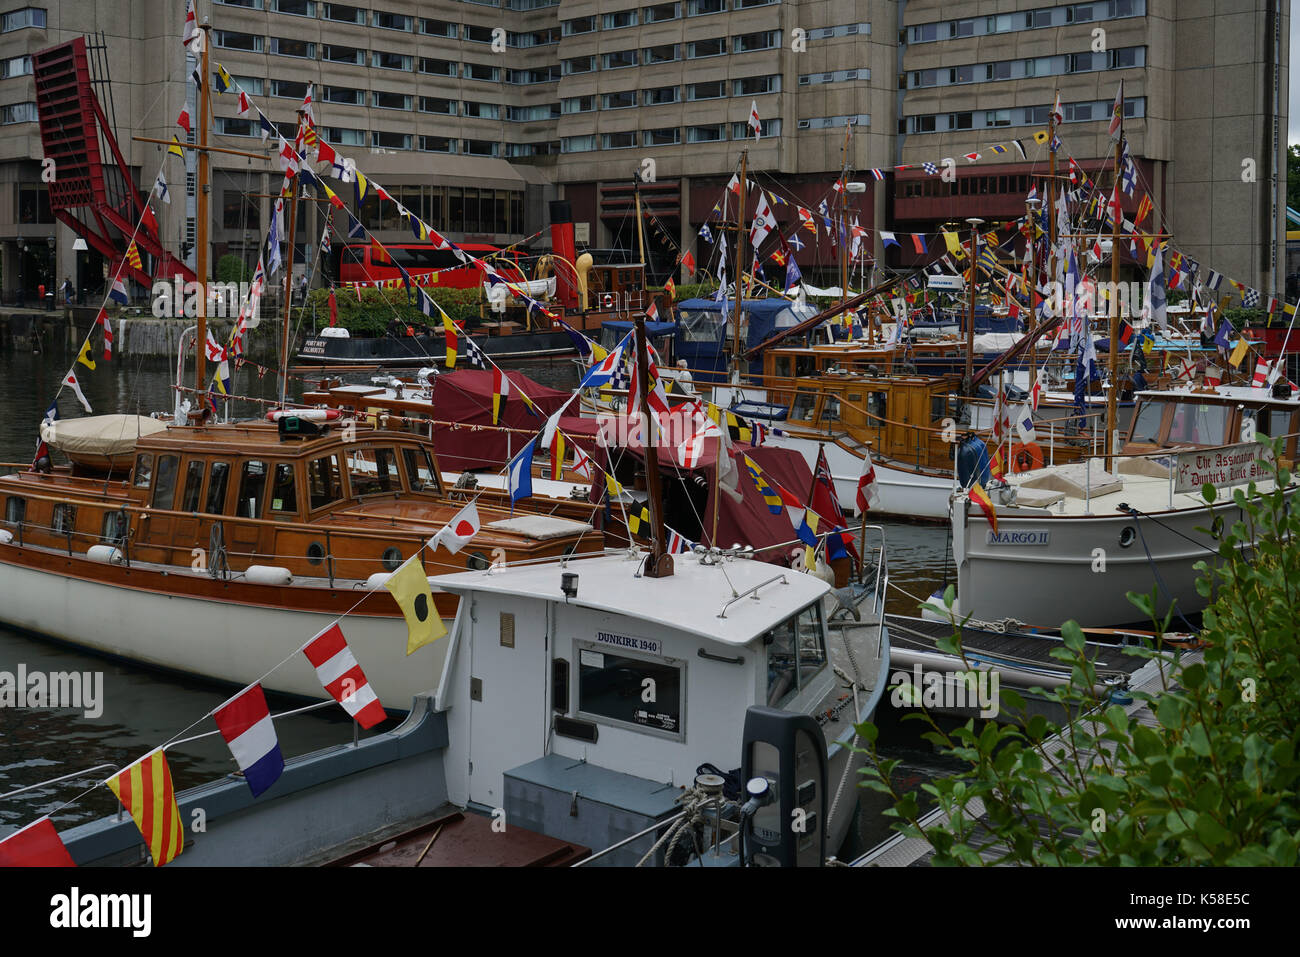 London, England, UK. 8th September 2017. The 9th year of Classic Boat Festival at St. Katharine Docks, London, UK. Stock Photo